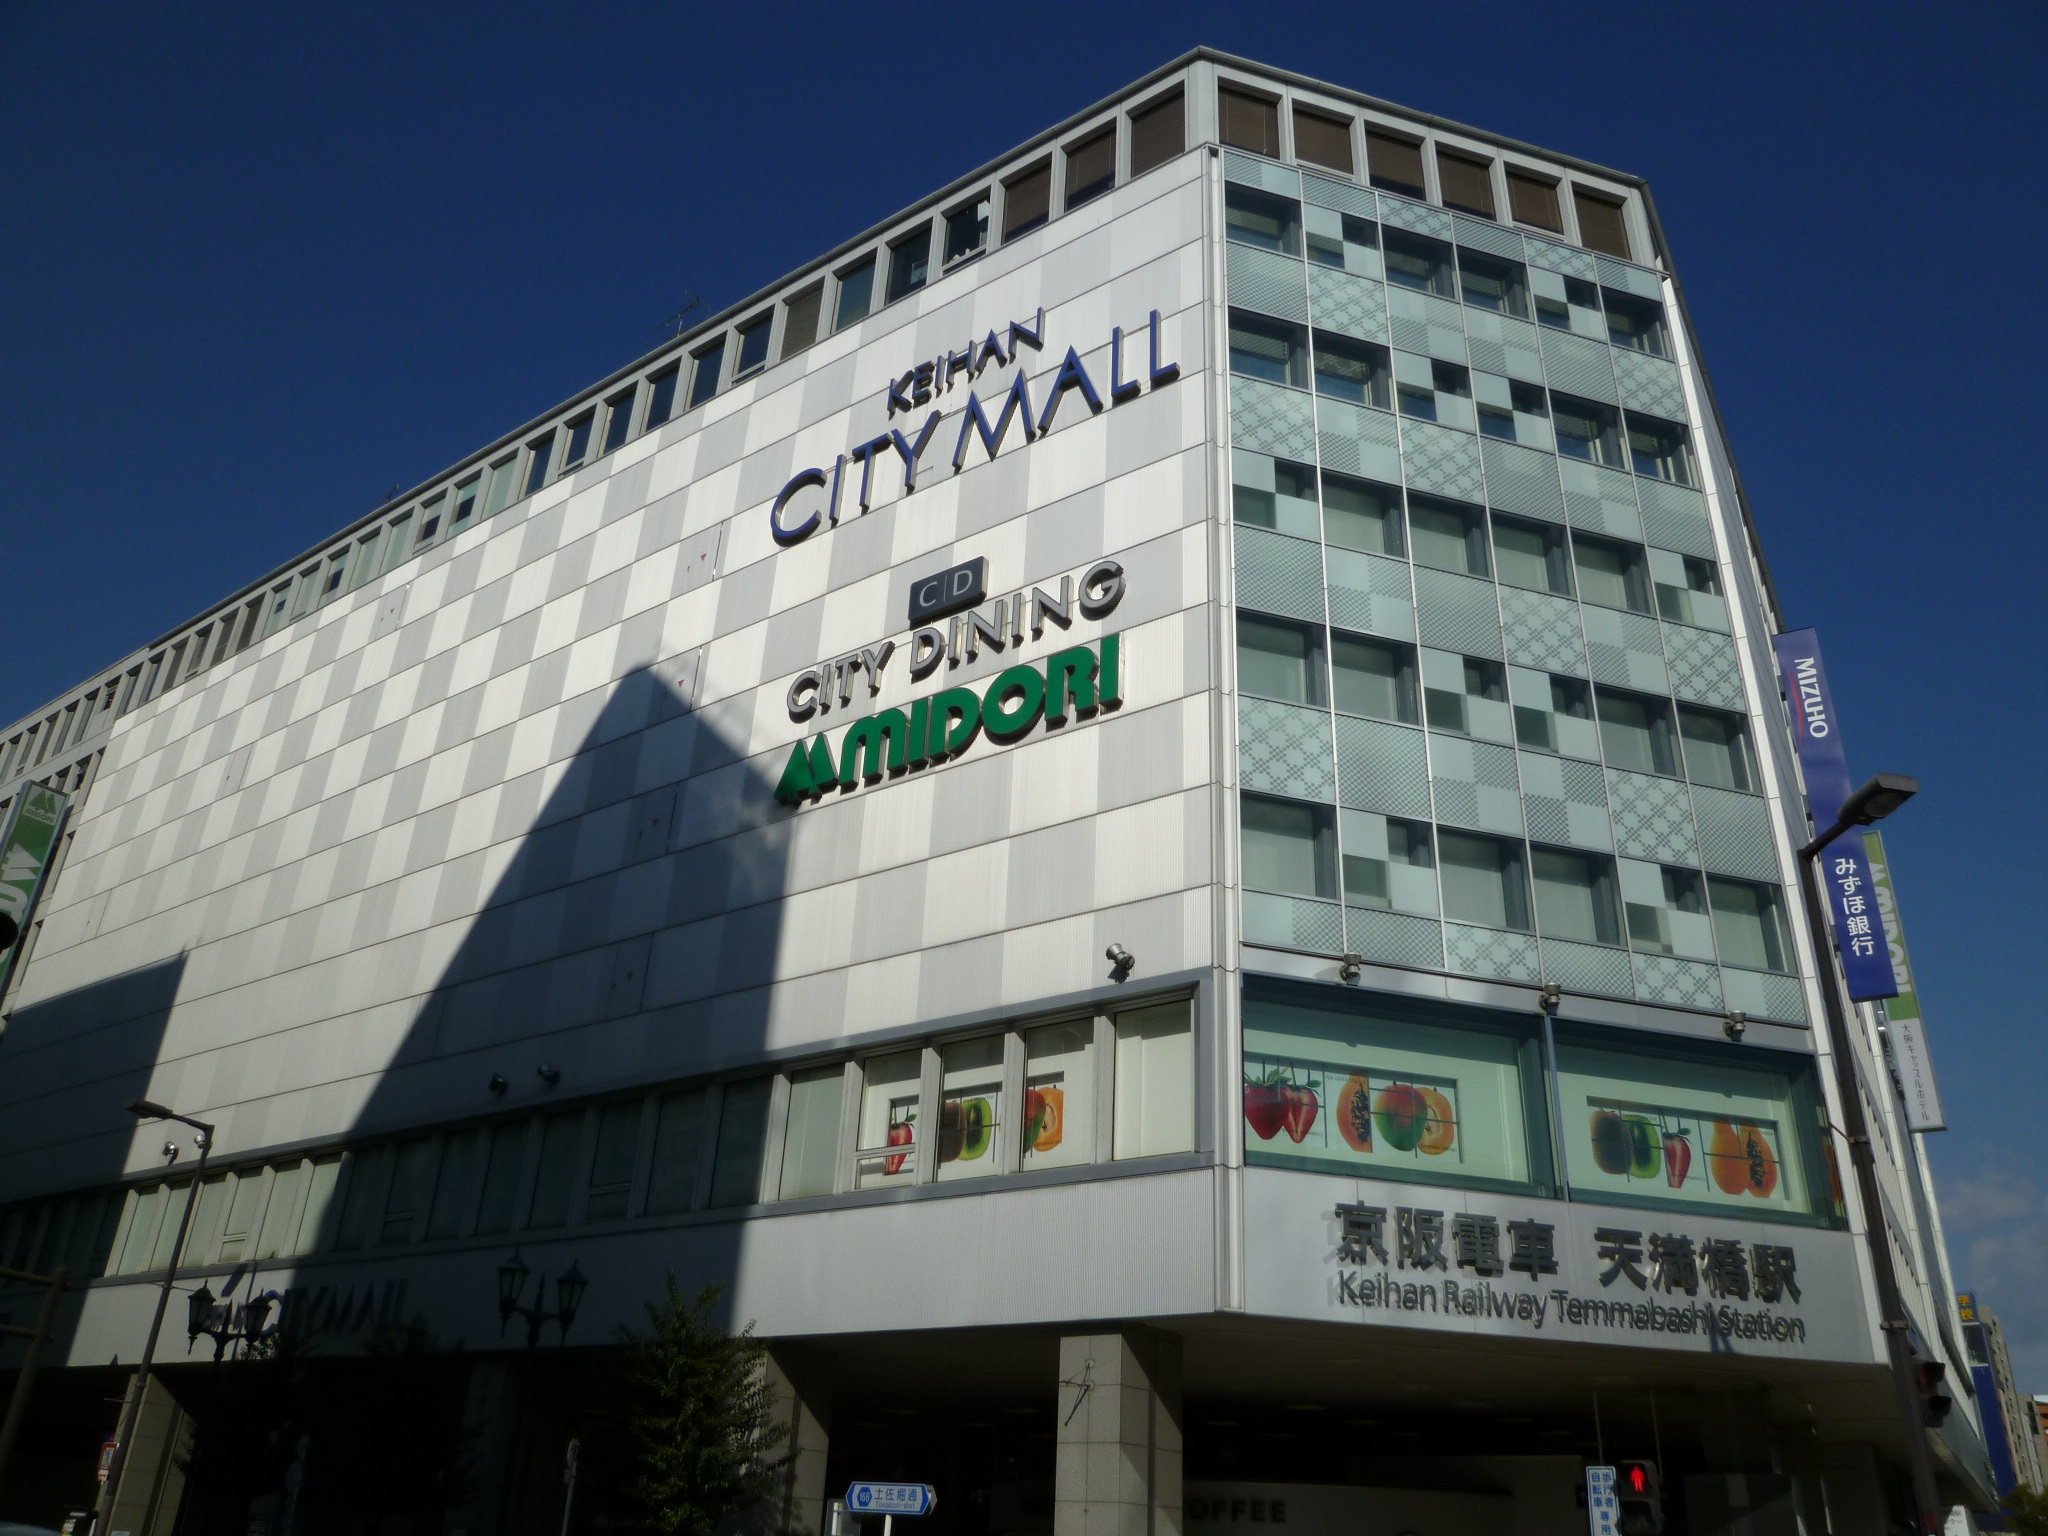 Shopping centre. 862m to Keihan City Mall (shopping center)